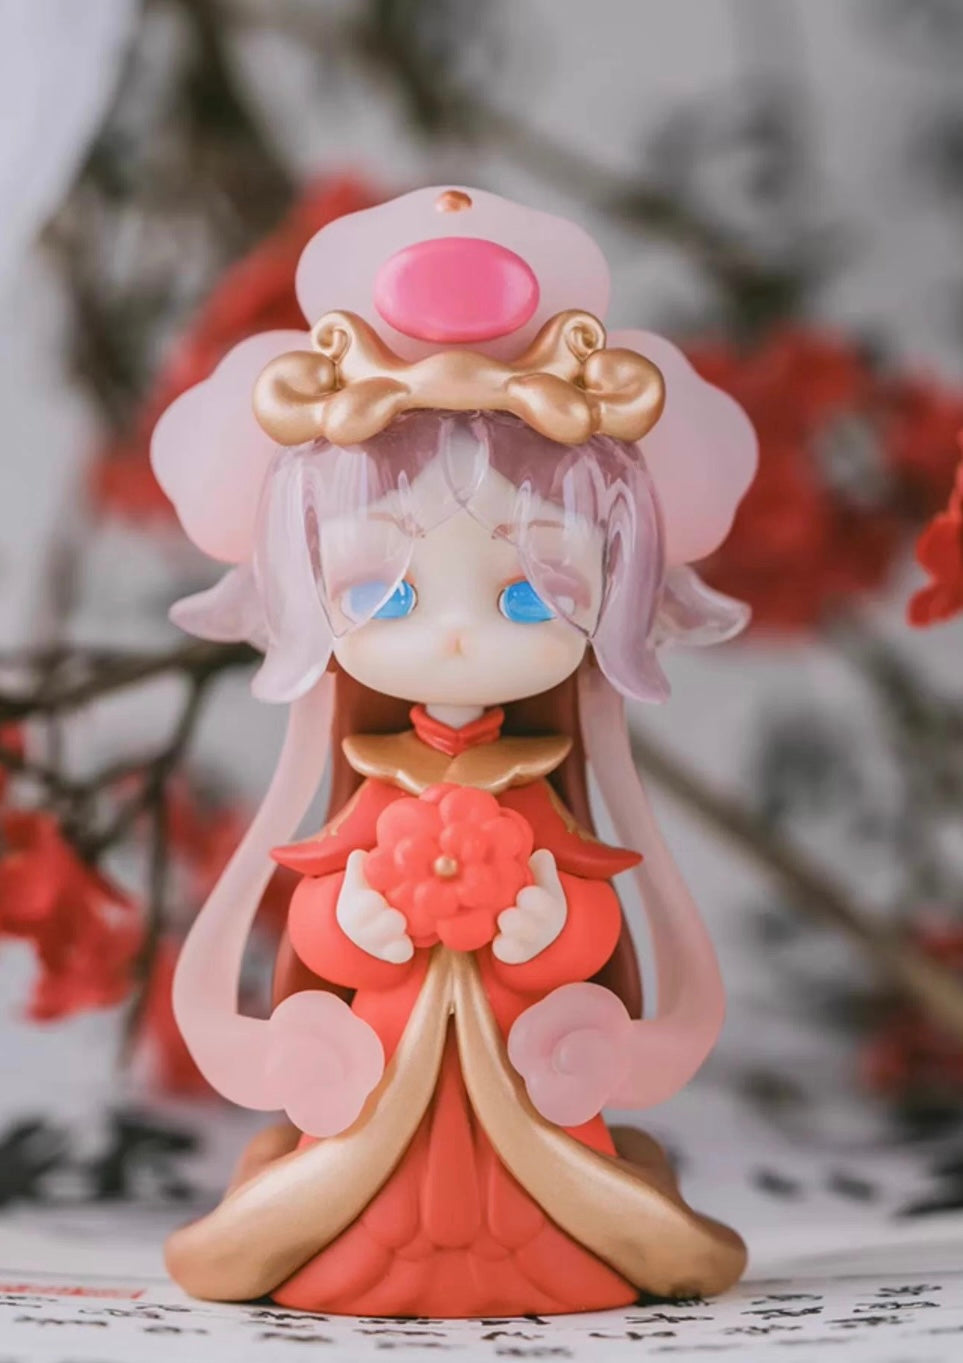 Spice princess legend of zhenhuan toy doll